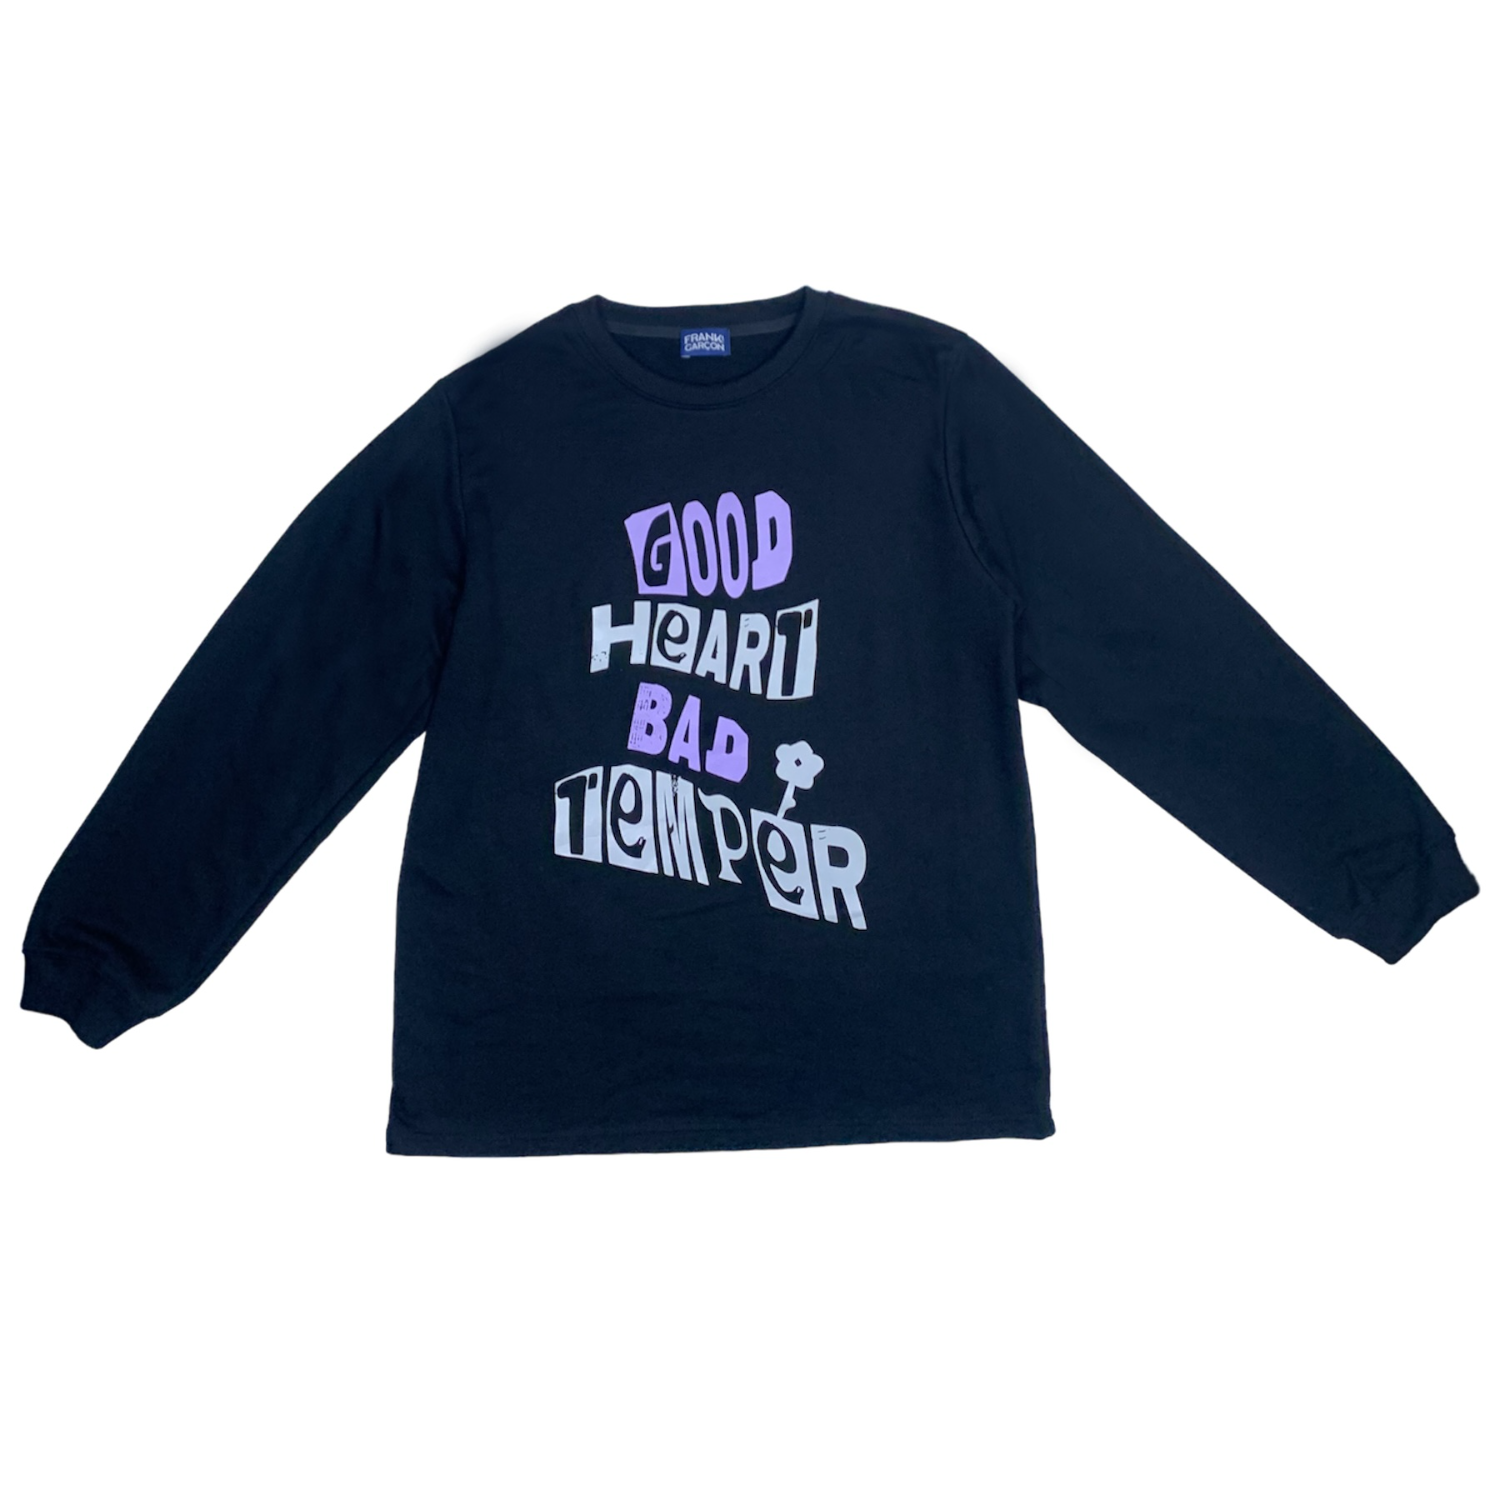 Good Heart Bad Temper Sweater (Black)